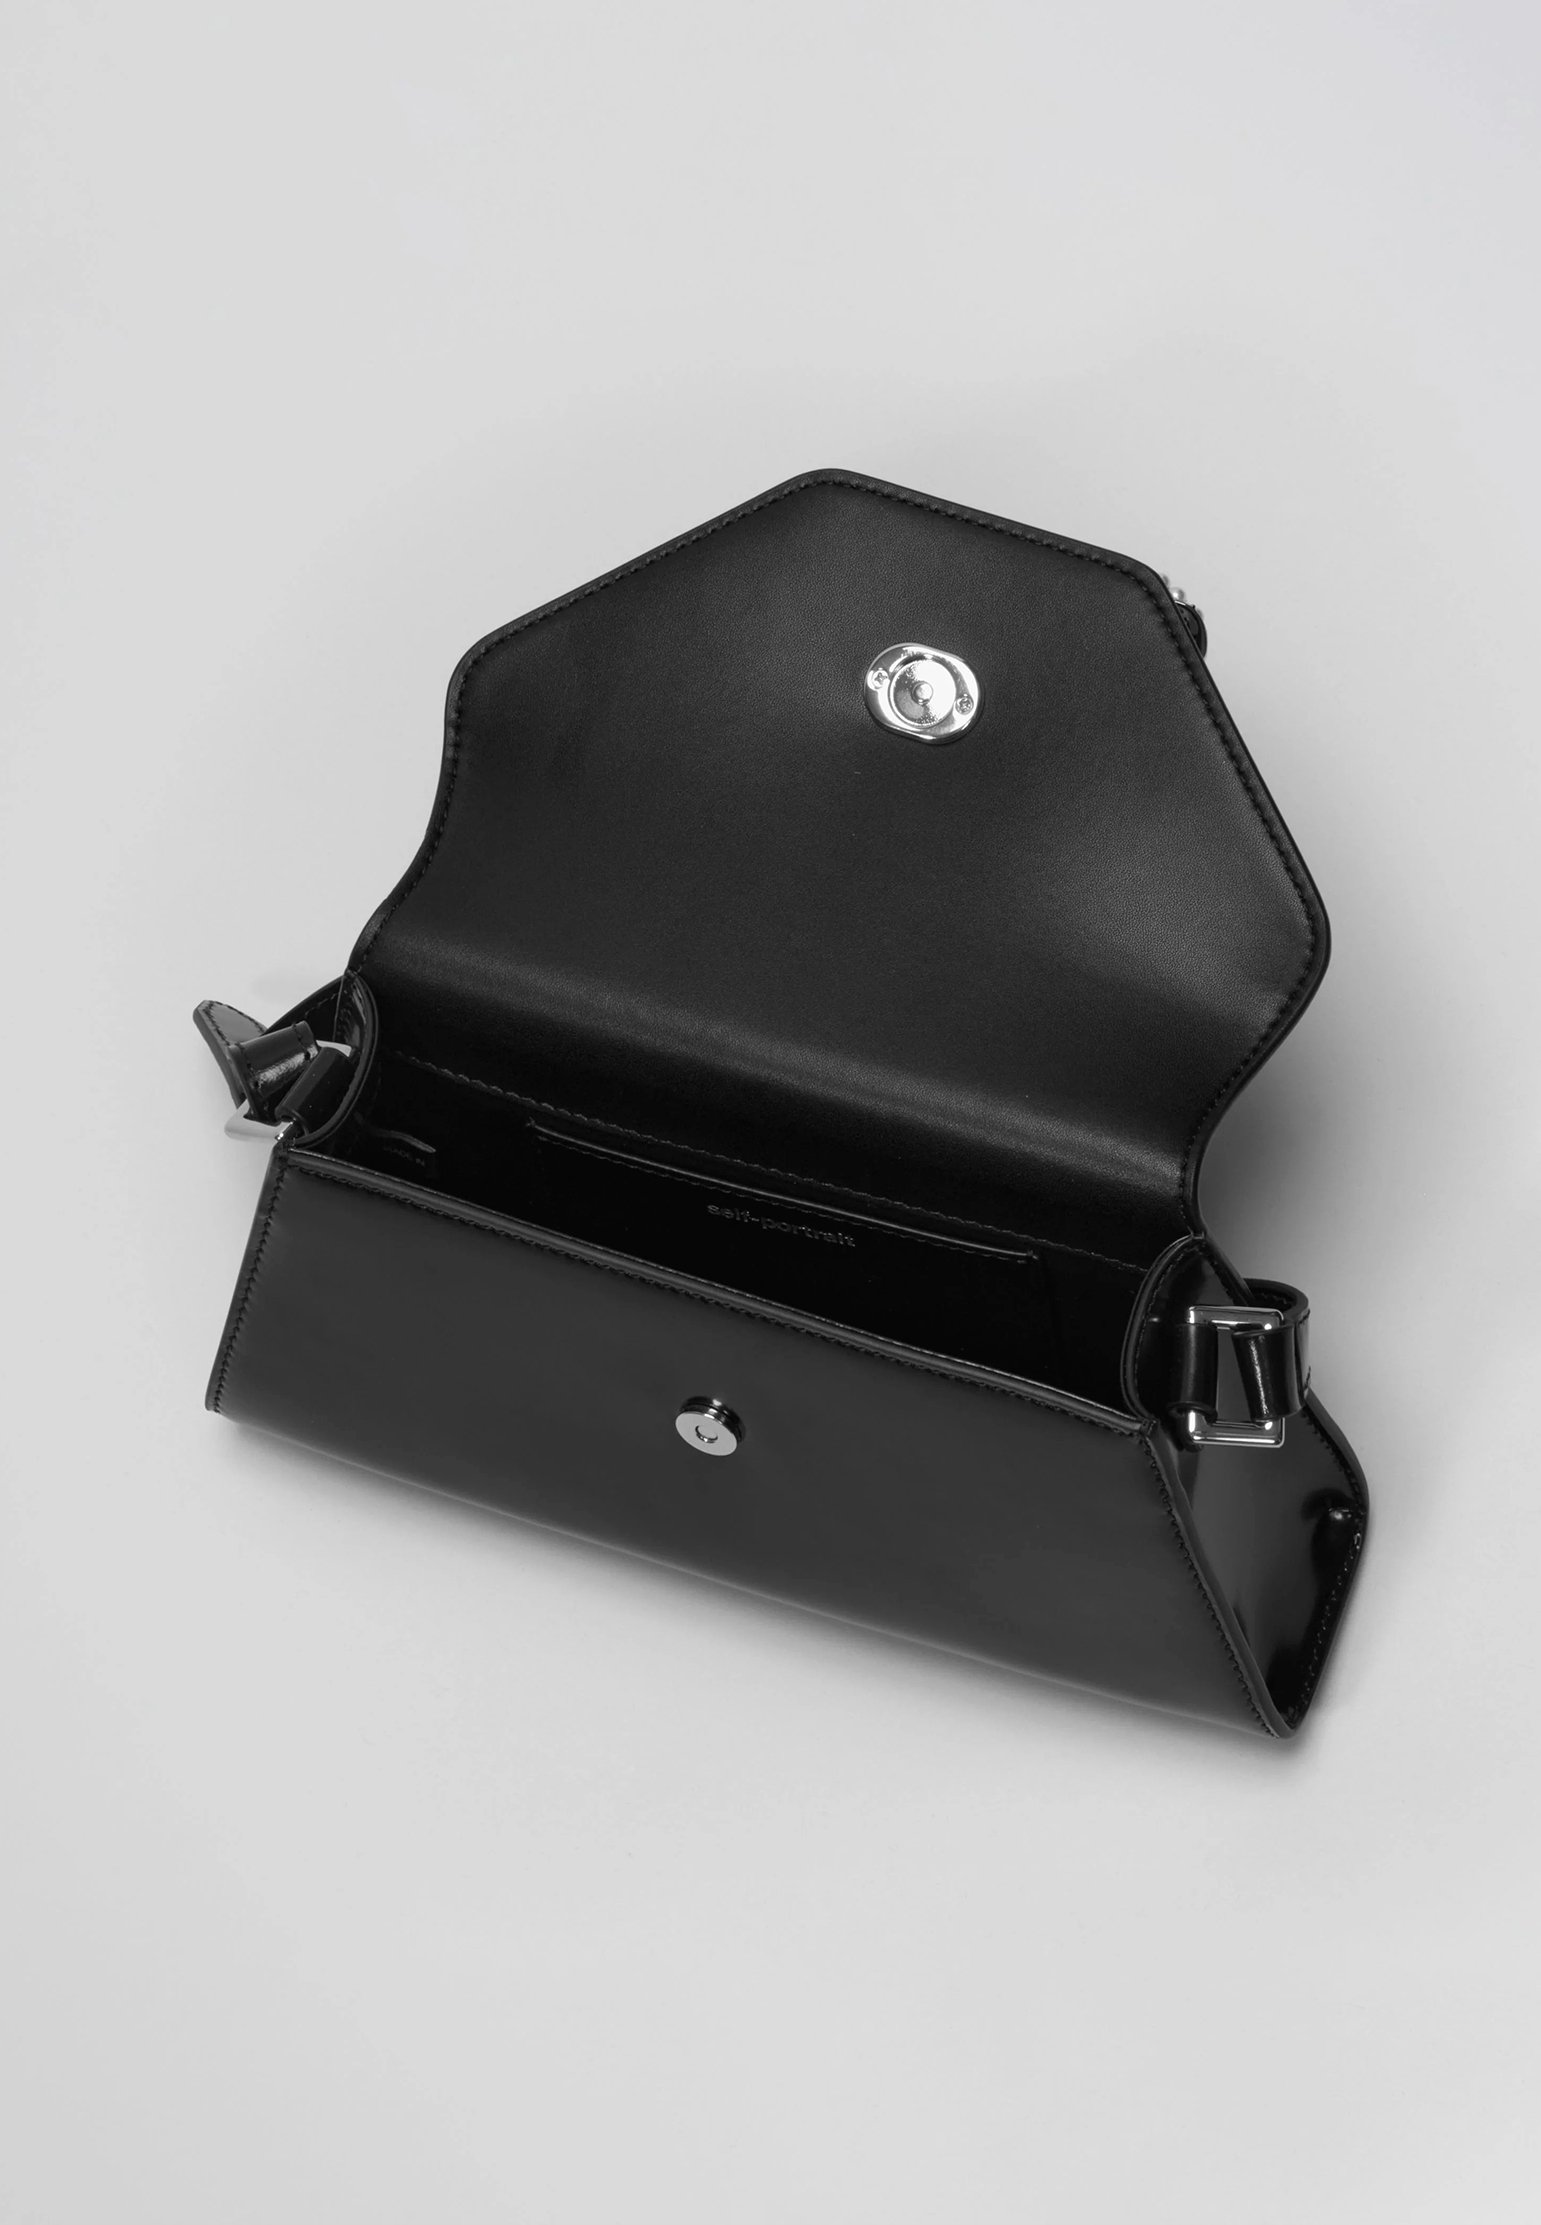 Bag SELF-PORTRAIT Color: black (Code: 1785) in online store Allure